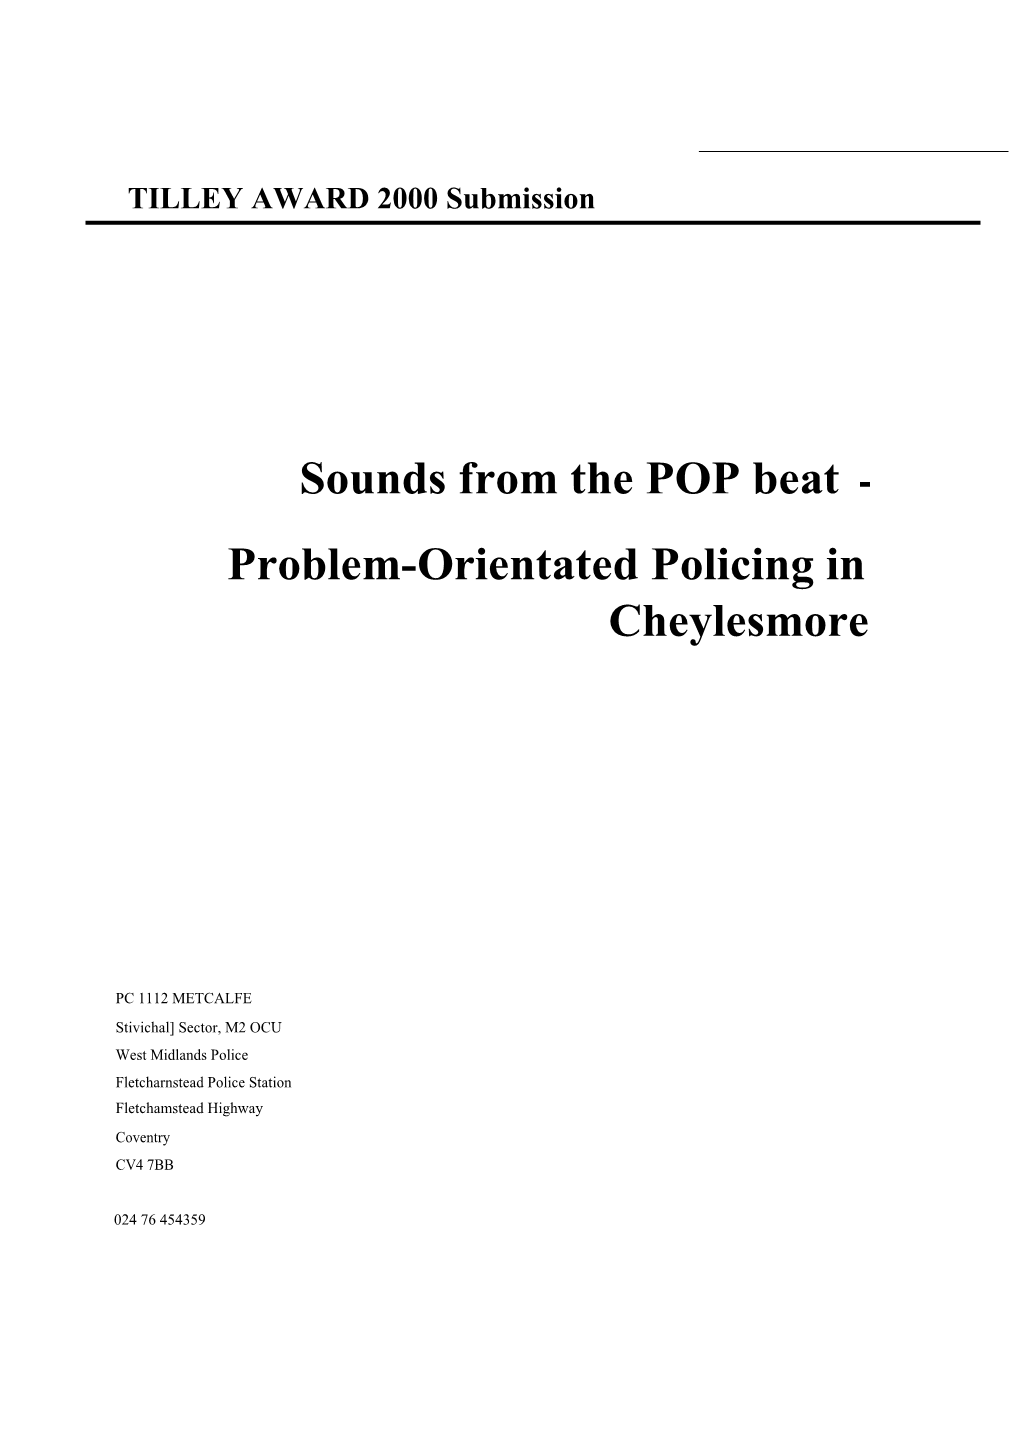 Problem-Orientated Policing in Cheylesmore